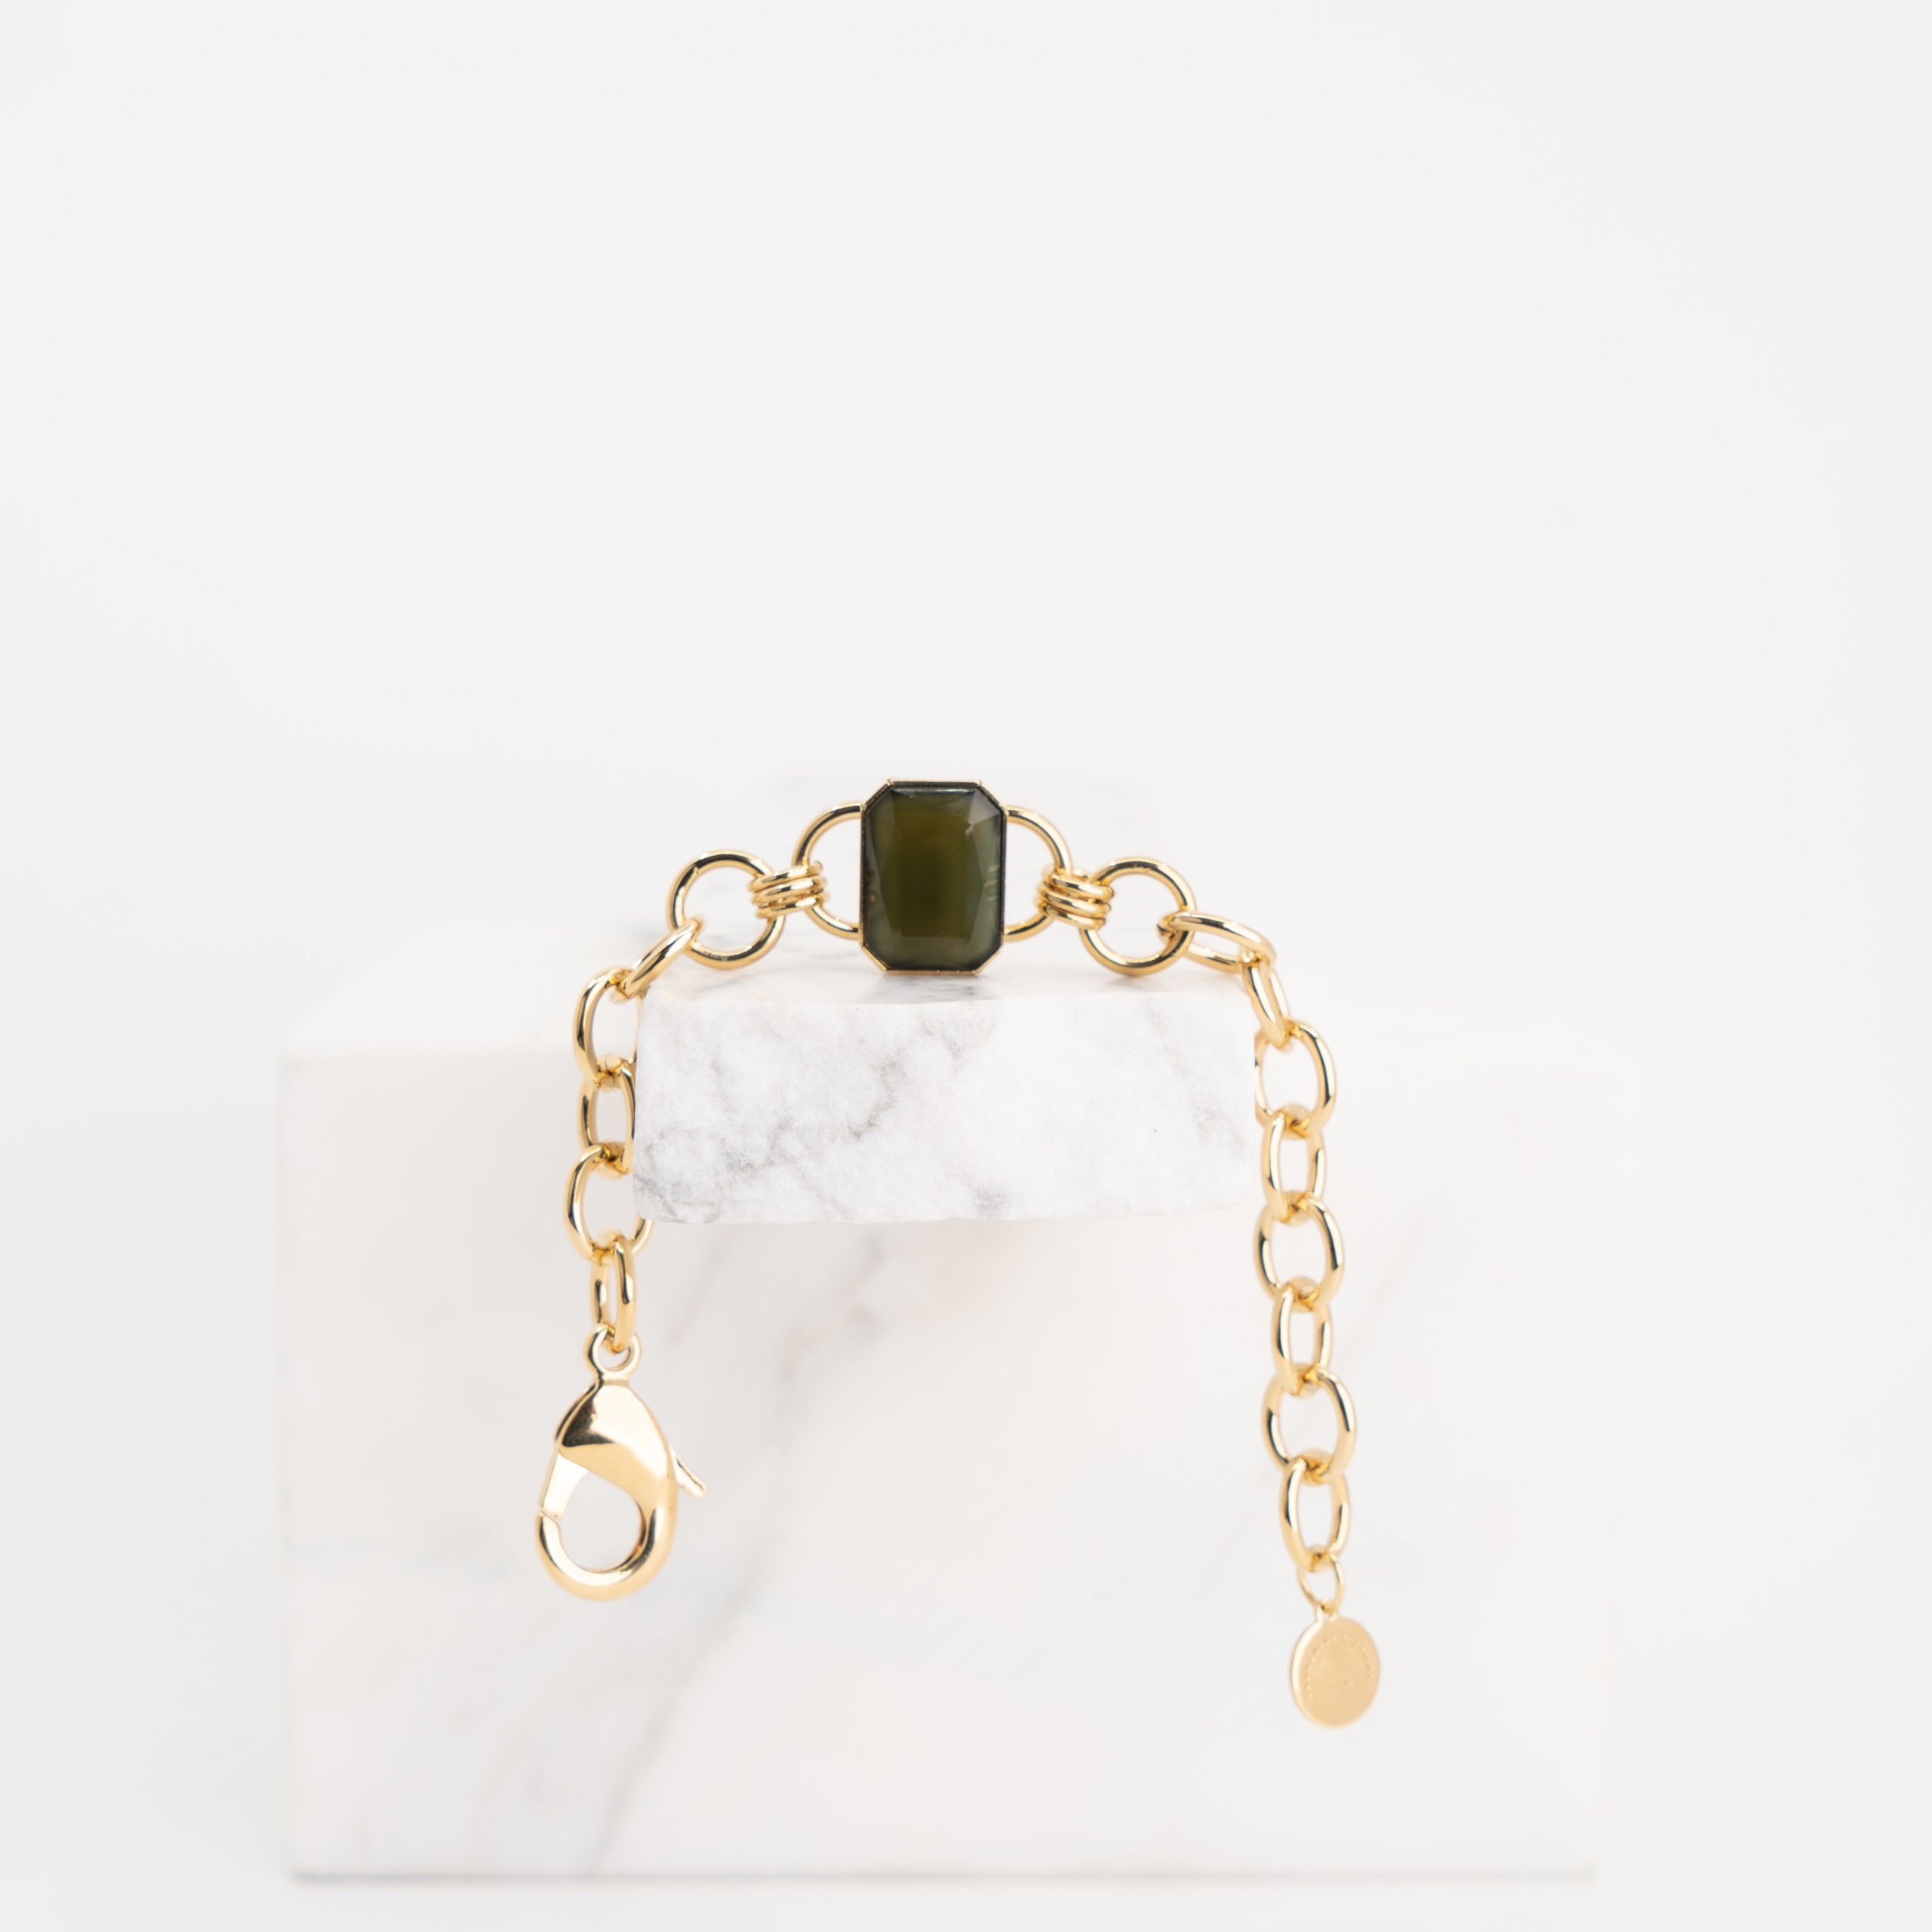 Tiffany green stones bracelet